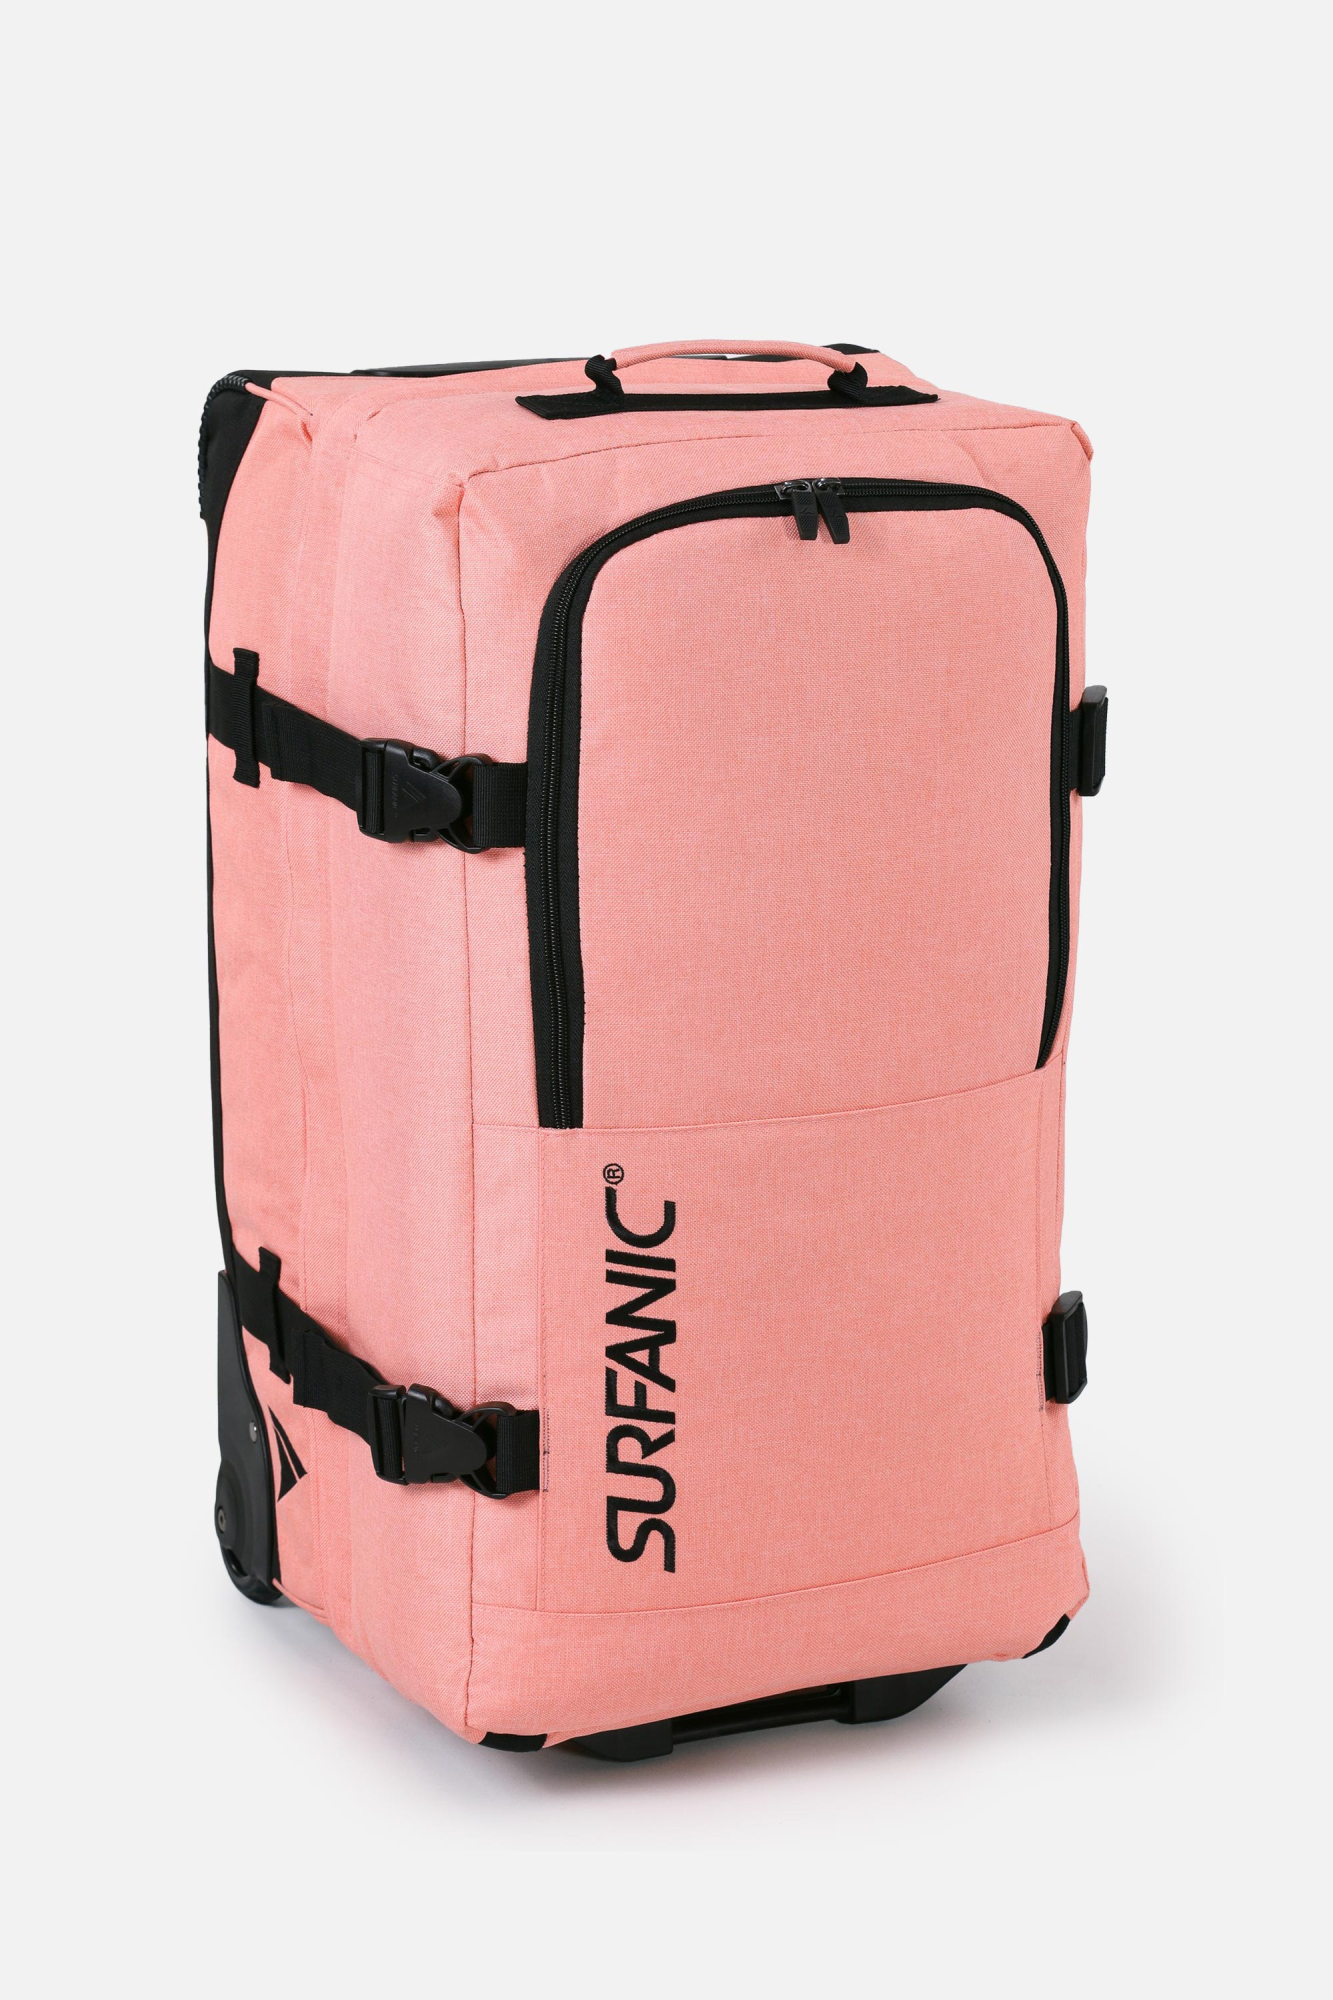 Surfanic Unisex Maxim 70 Roller Bag Pink - Size: 70 Litre